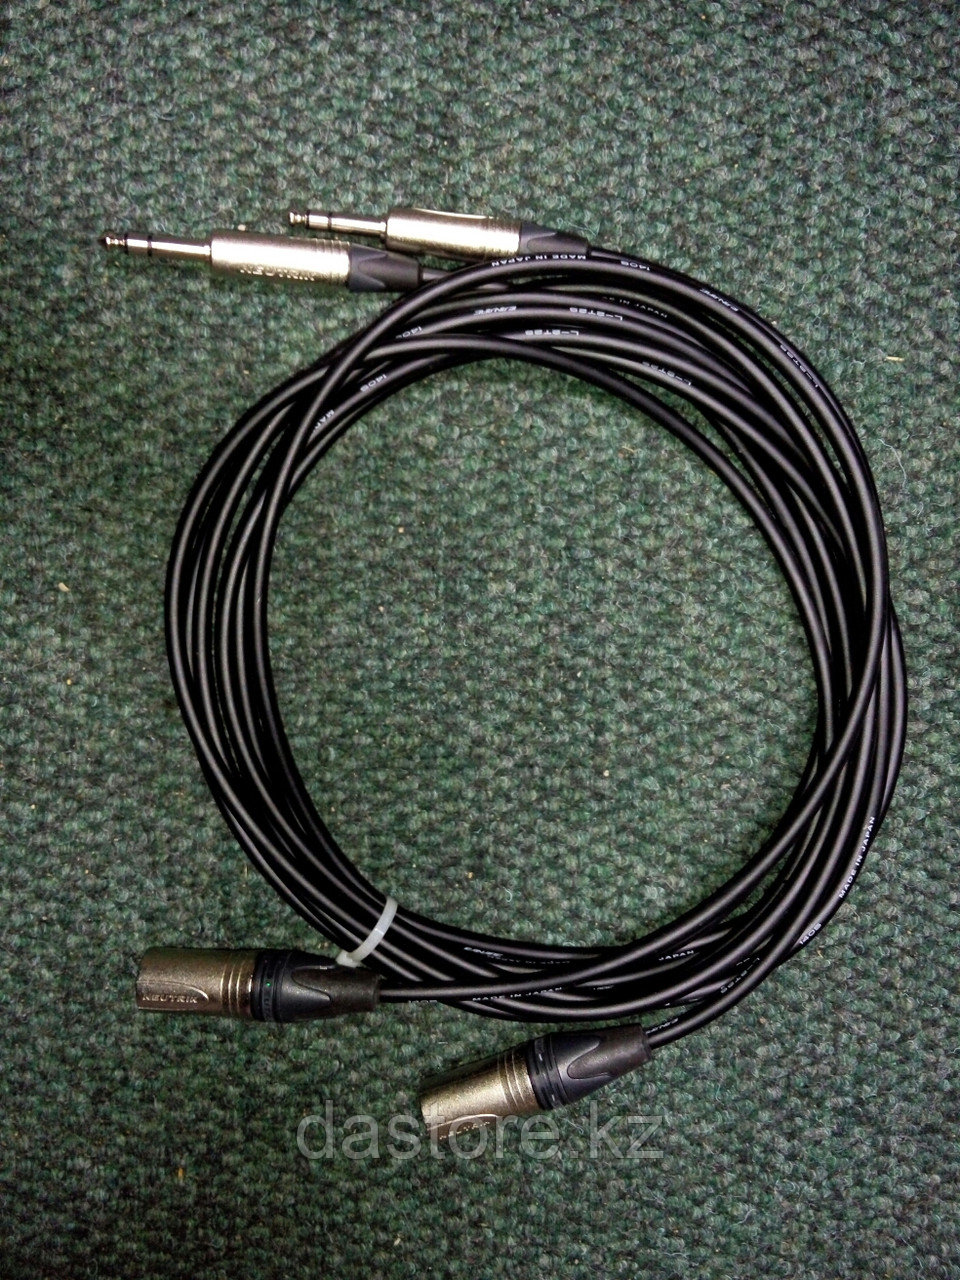 DaStore Products AIJSXM-03-P, готовый аудио микрофонный кабель с XLR 3 PIN папа (canon) и Stereo 1/4 Jack (TRS) разъёмами, длина 3 метра